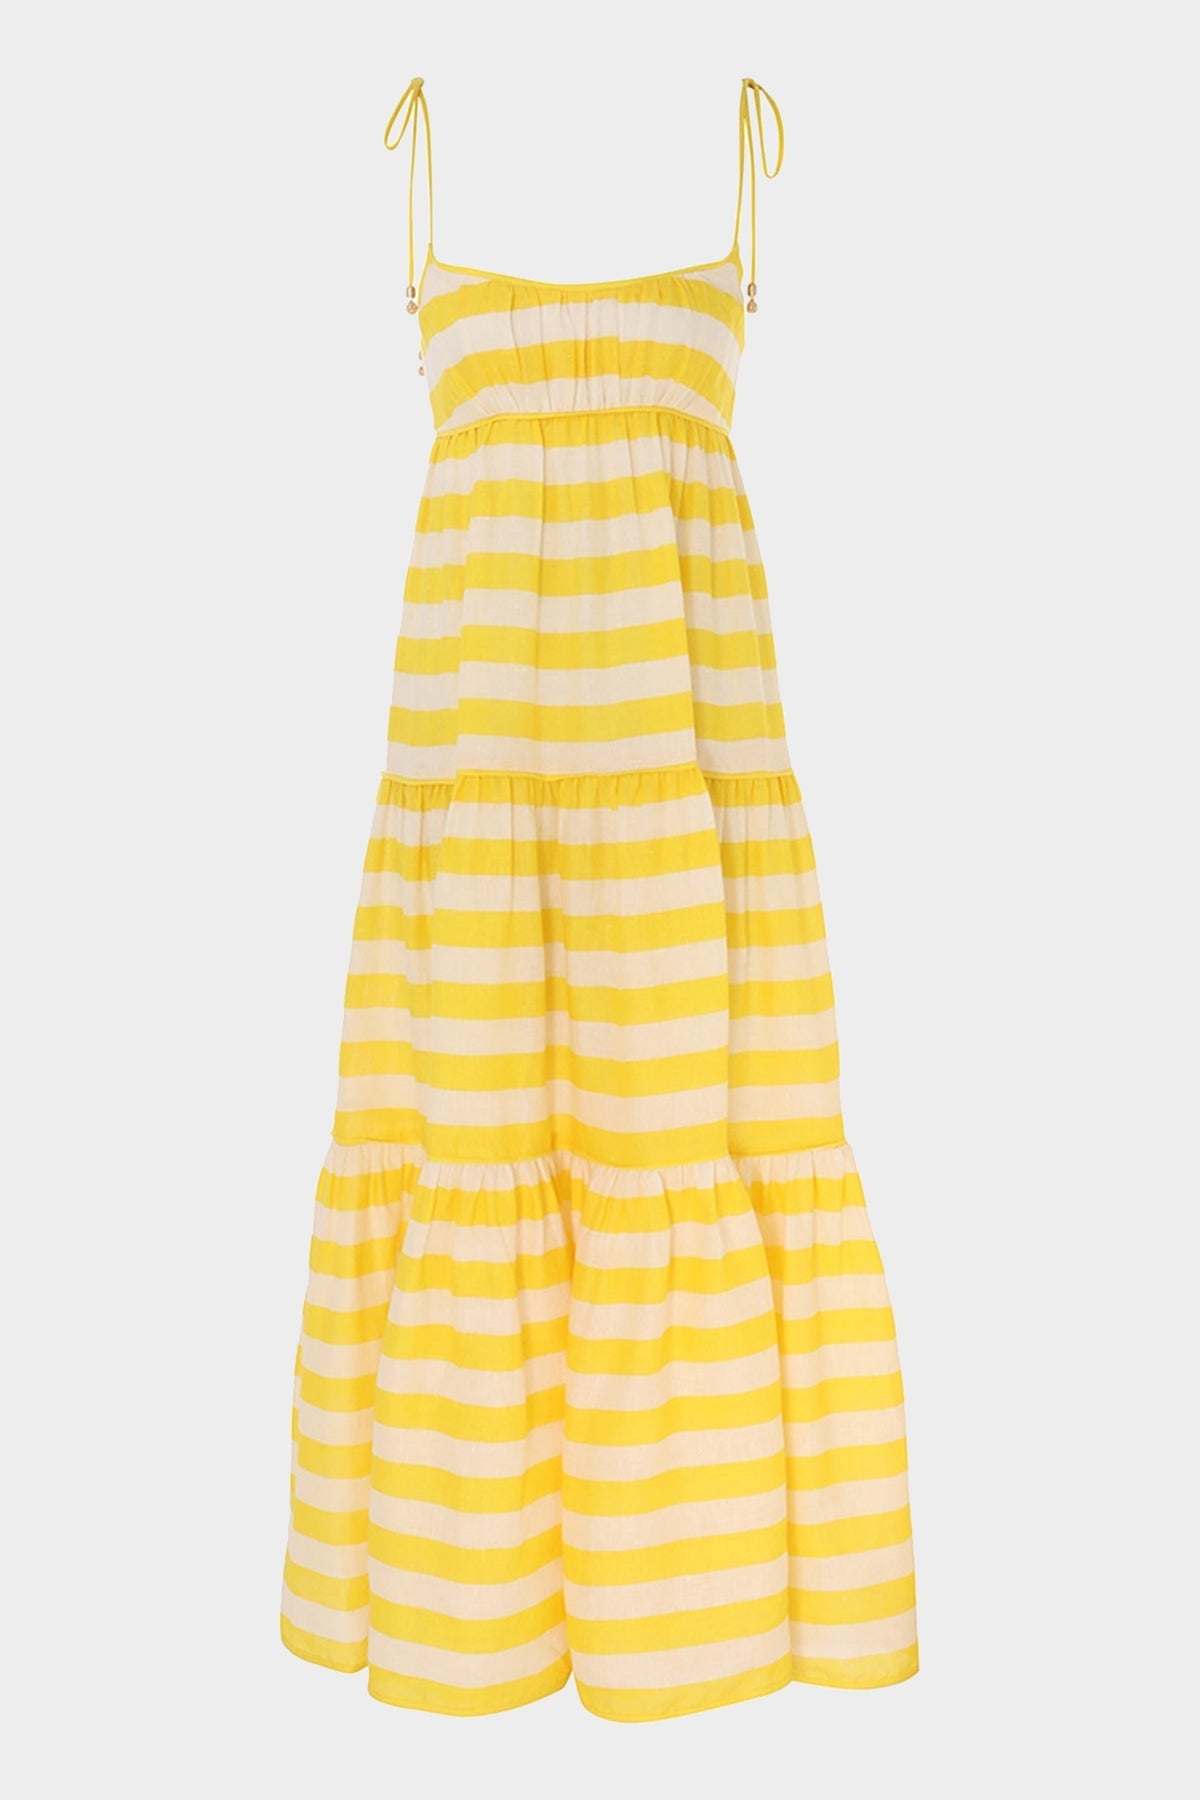 Alight Tie Shoulder Dress in Yellow Cream Stripe - shop-olivia.com